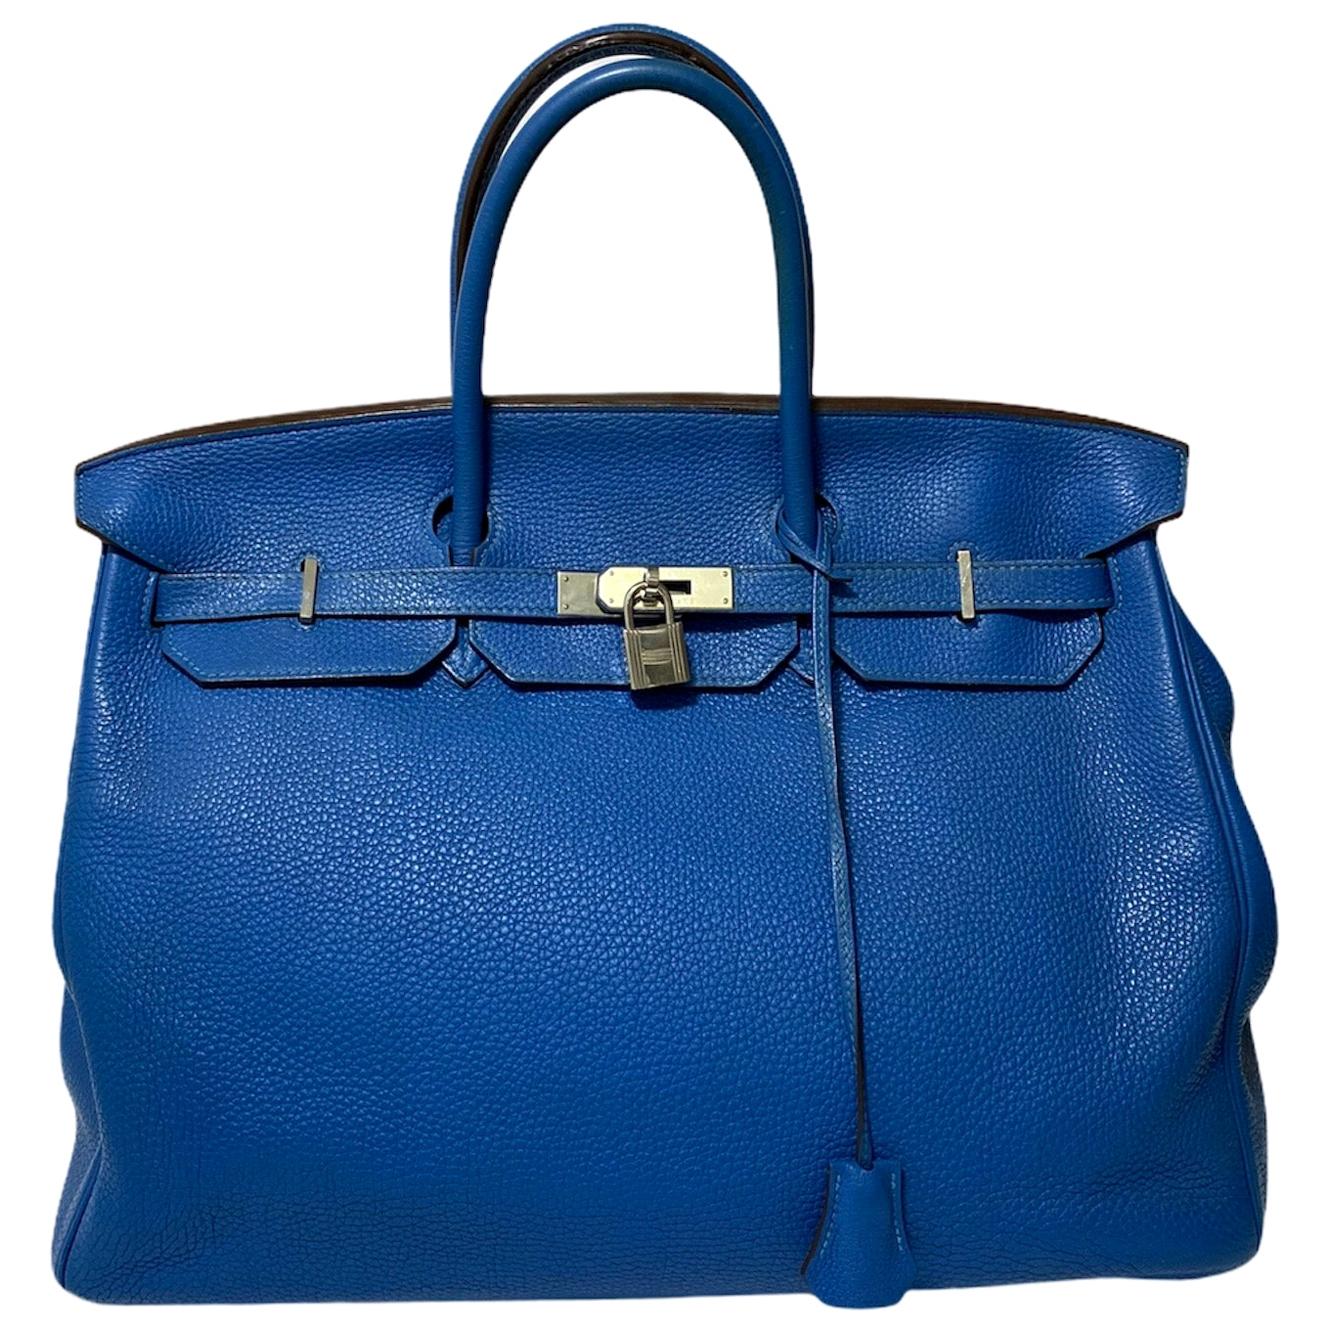 2011 Hermès Mykonos Togo Birkin 40 Bag